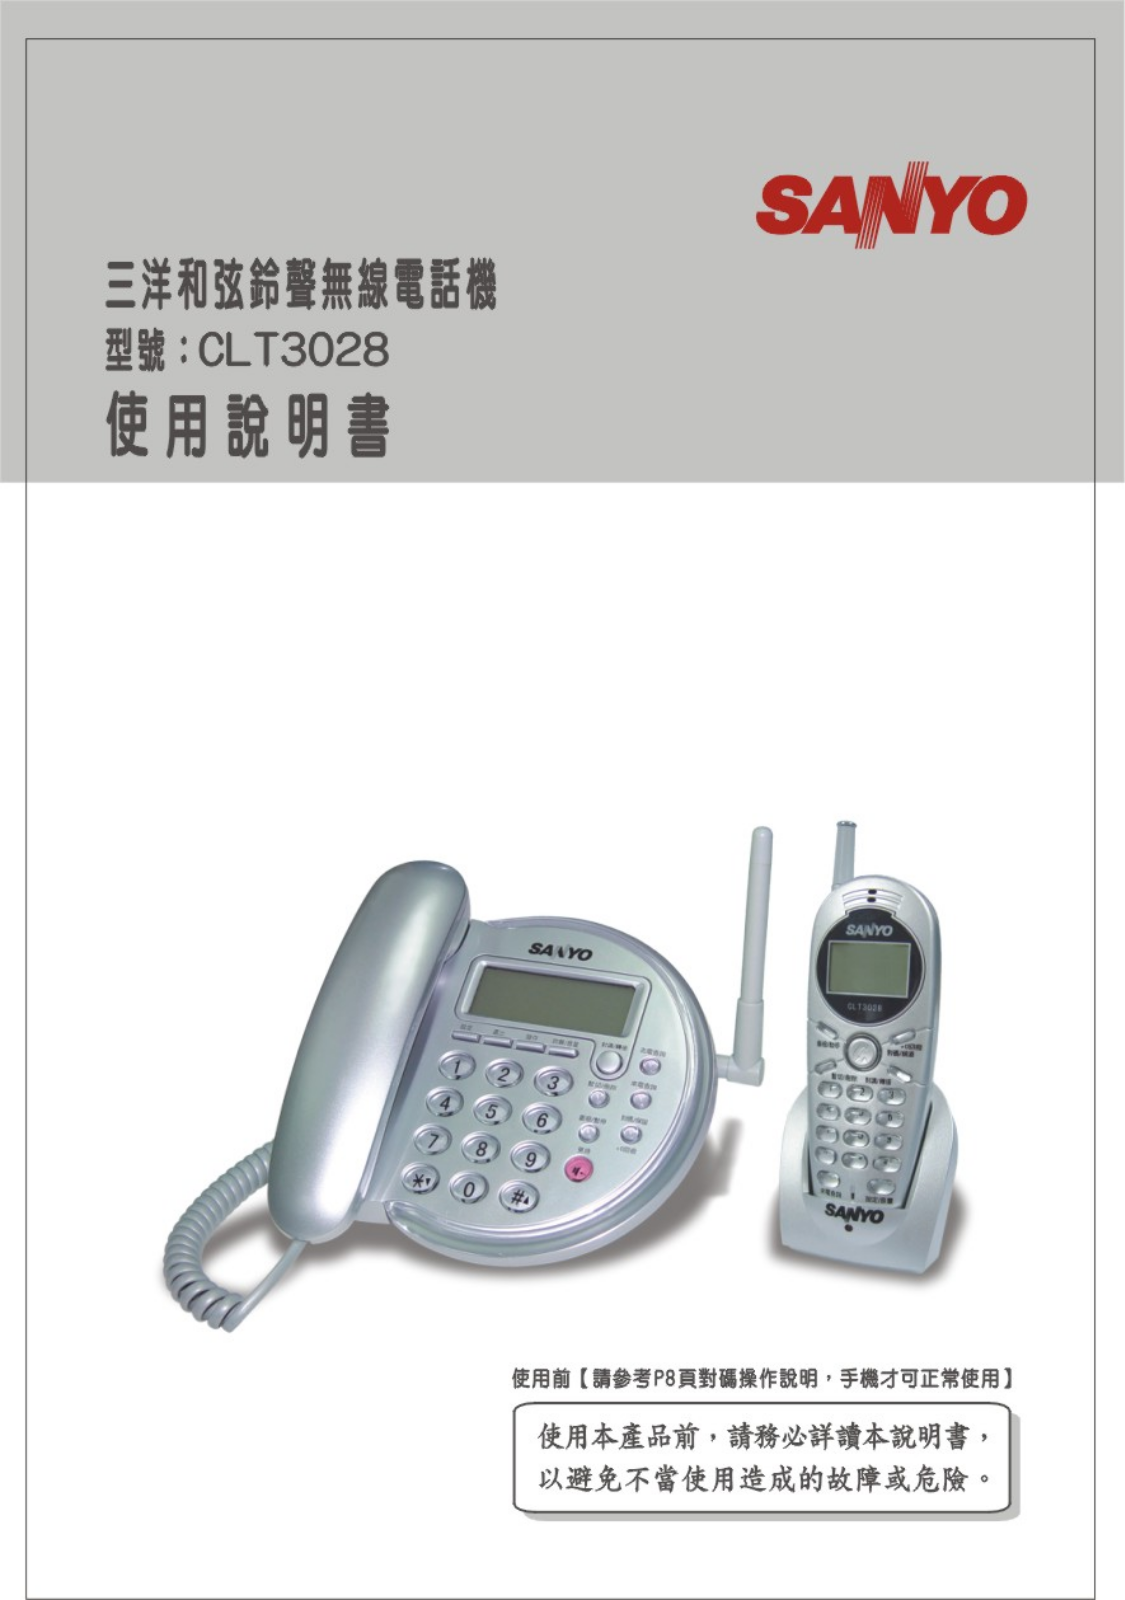 SANYO CLT3028 User Manual